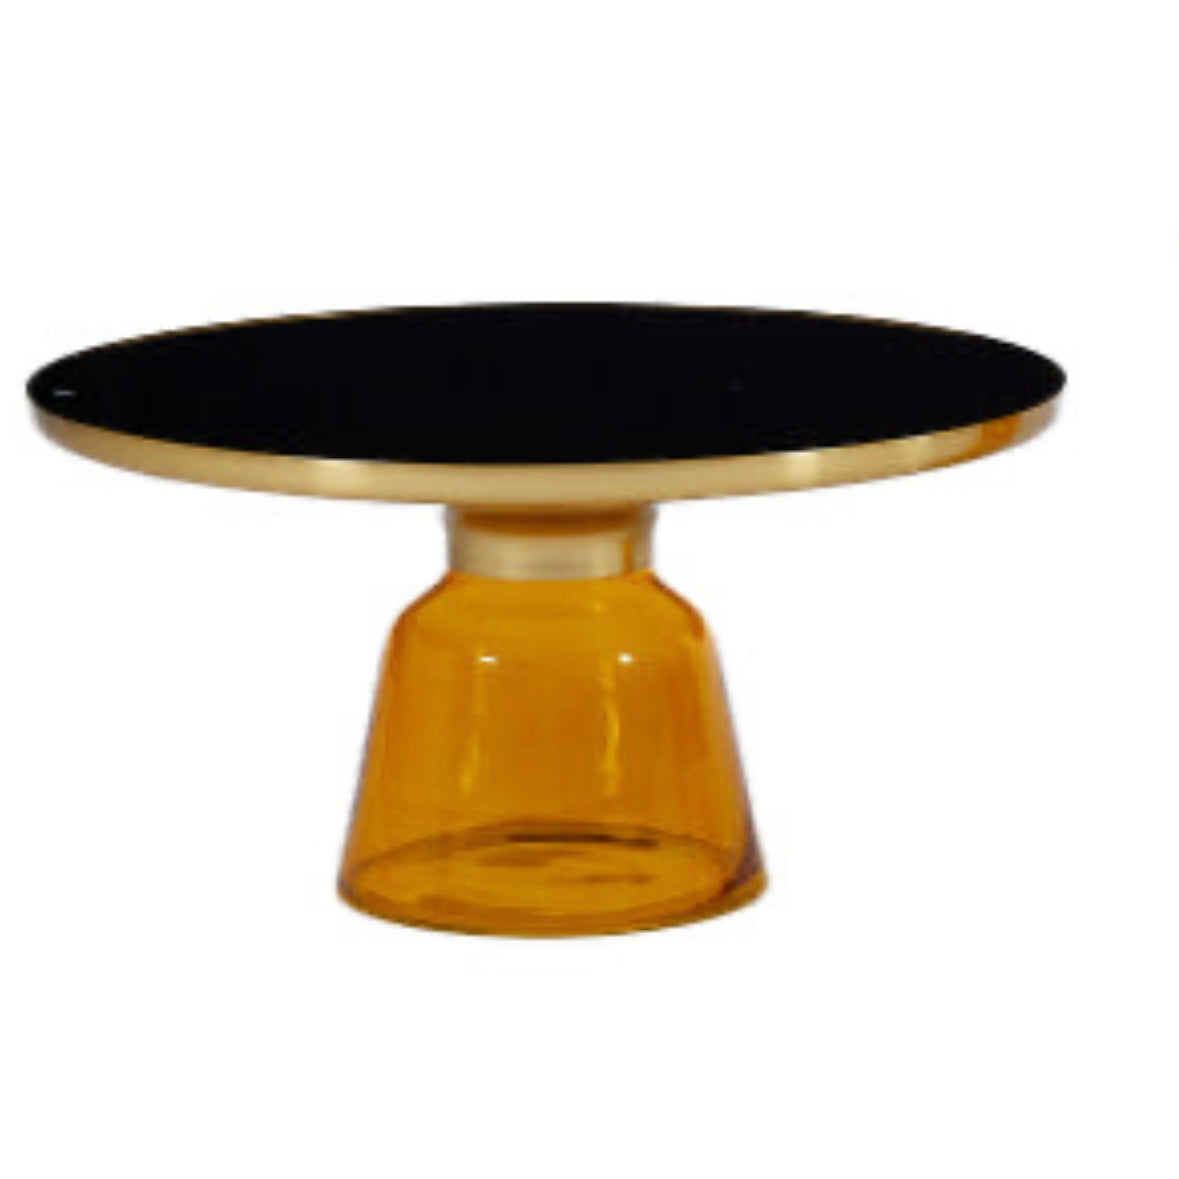 Murano tables